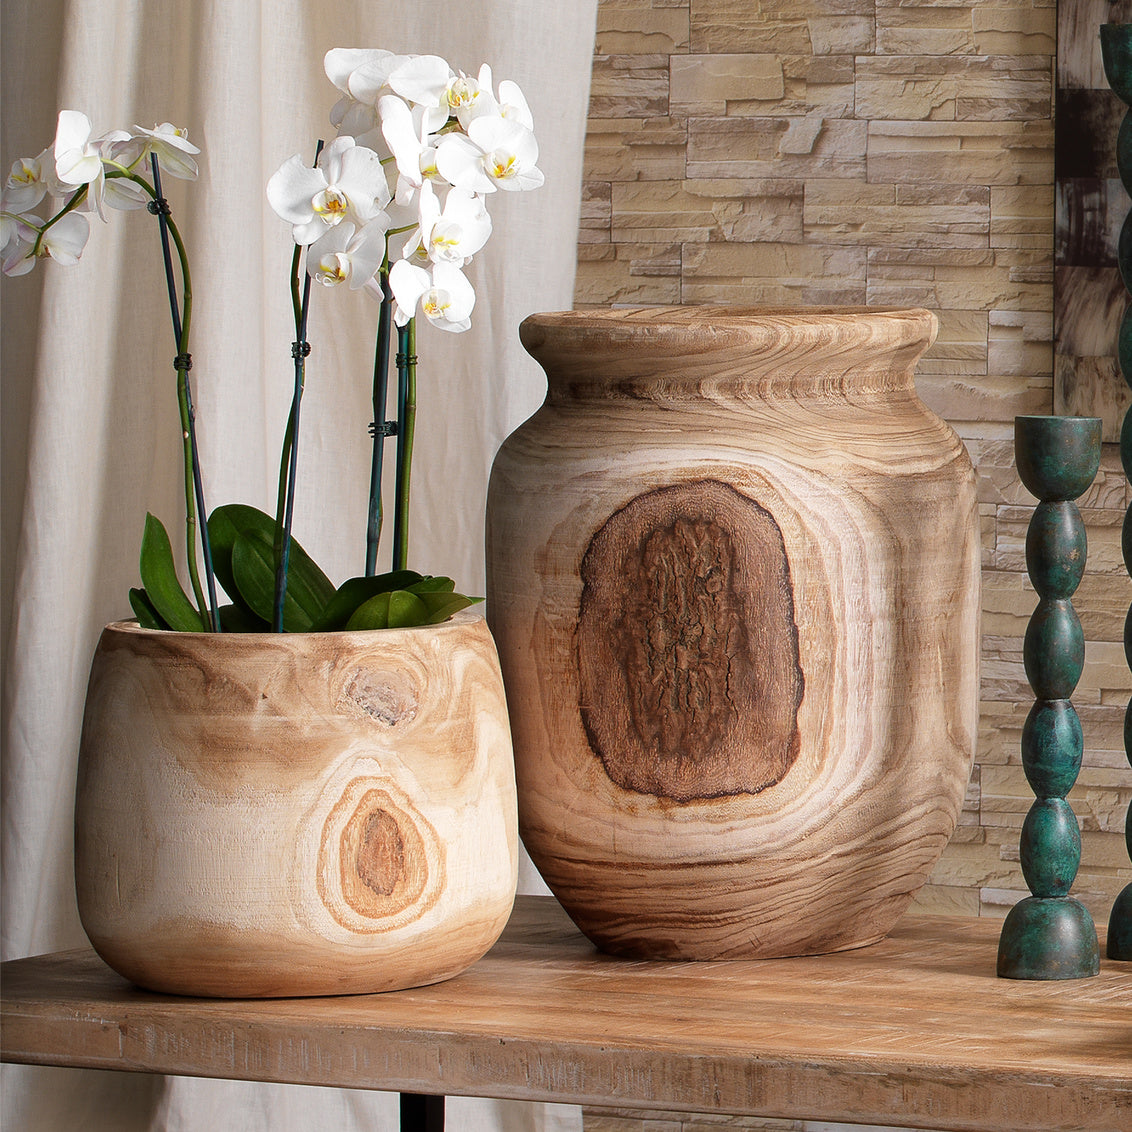 Topanga Wooden Vase